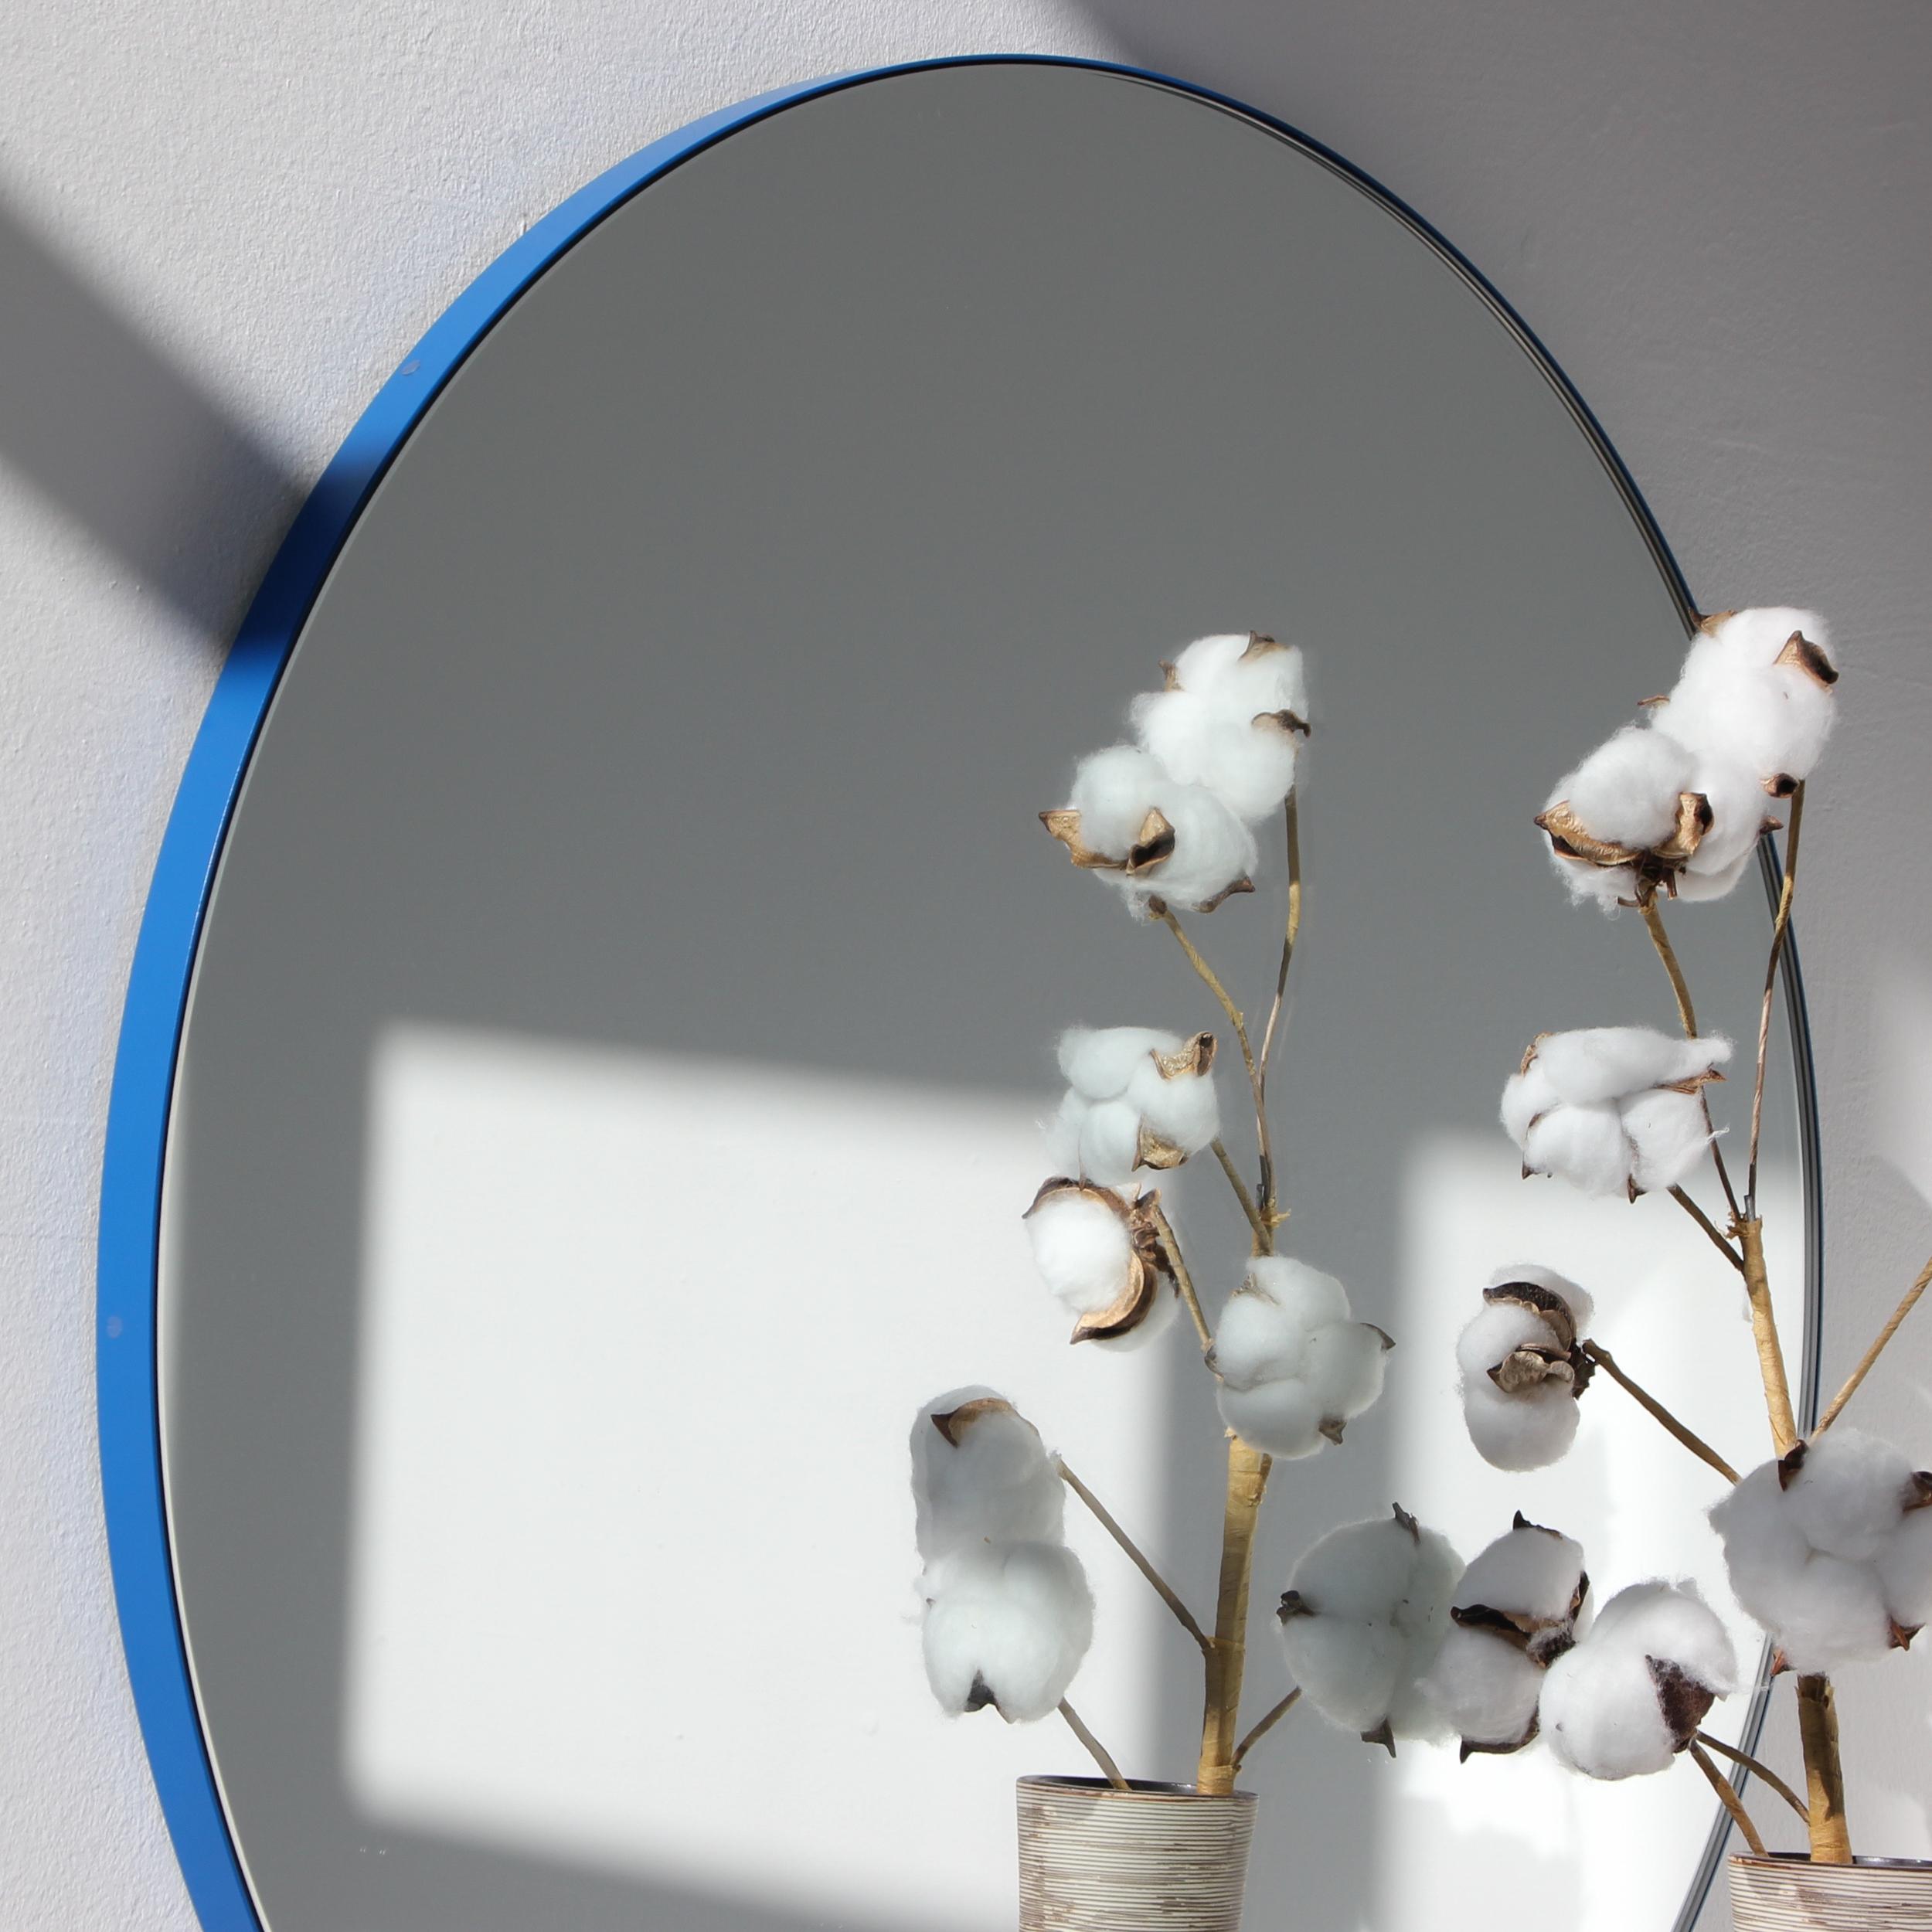 British Orbis Circular Modern Mirror with Minimalist Blue Frame, Medium For Sale